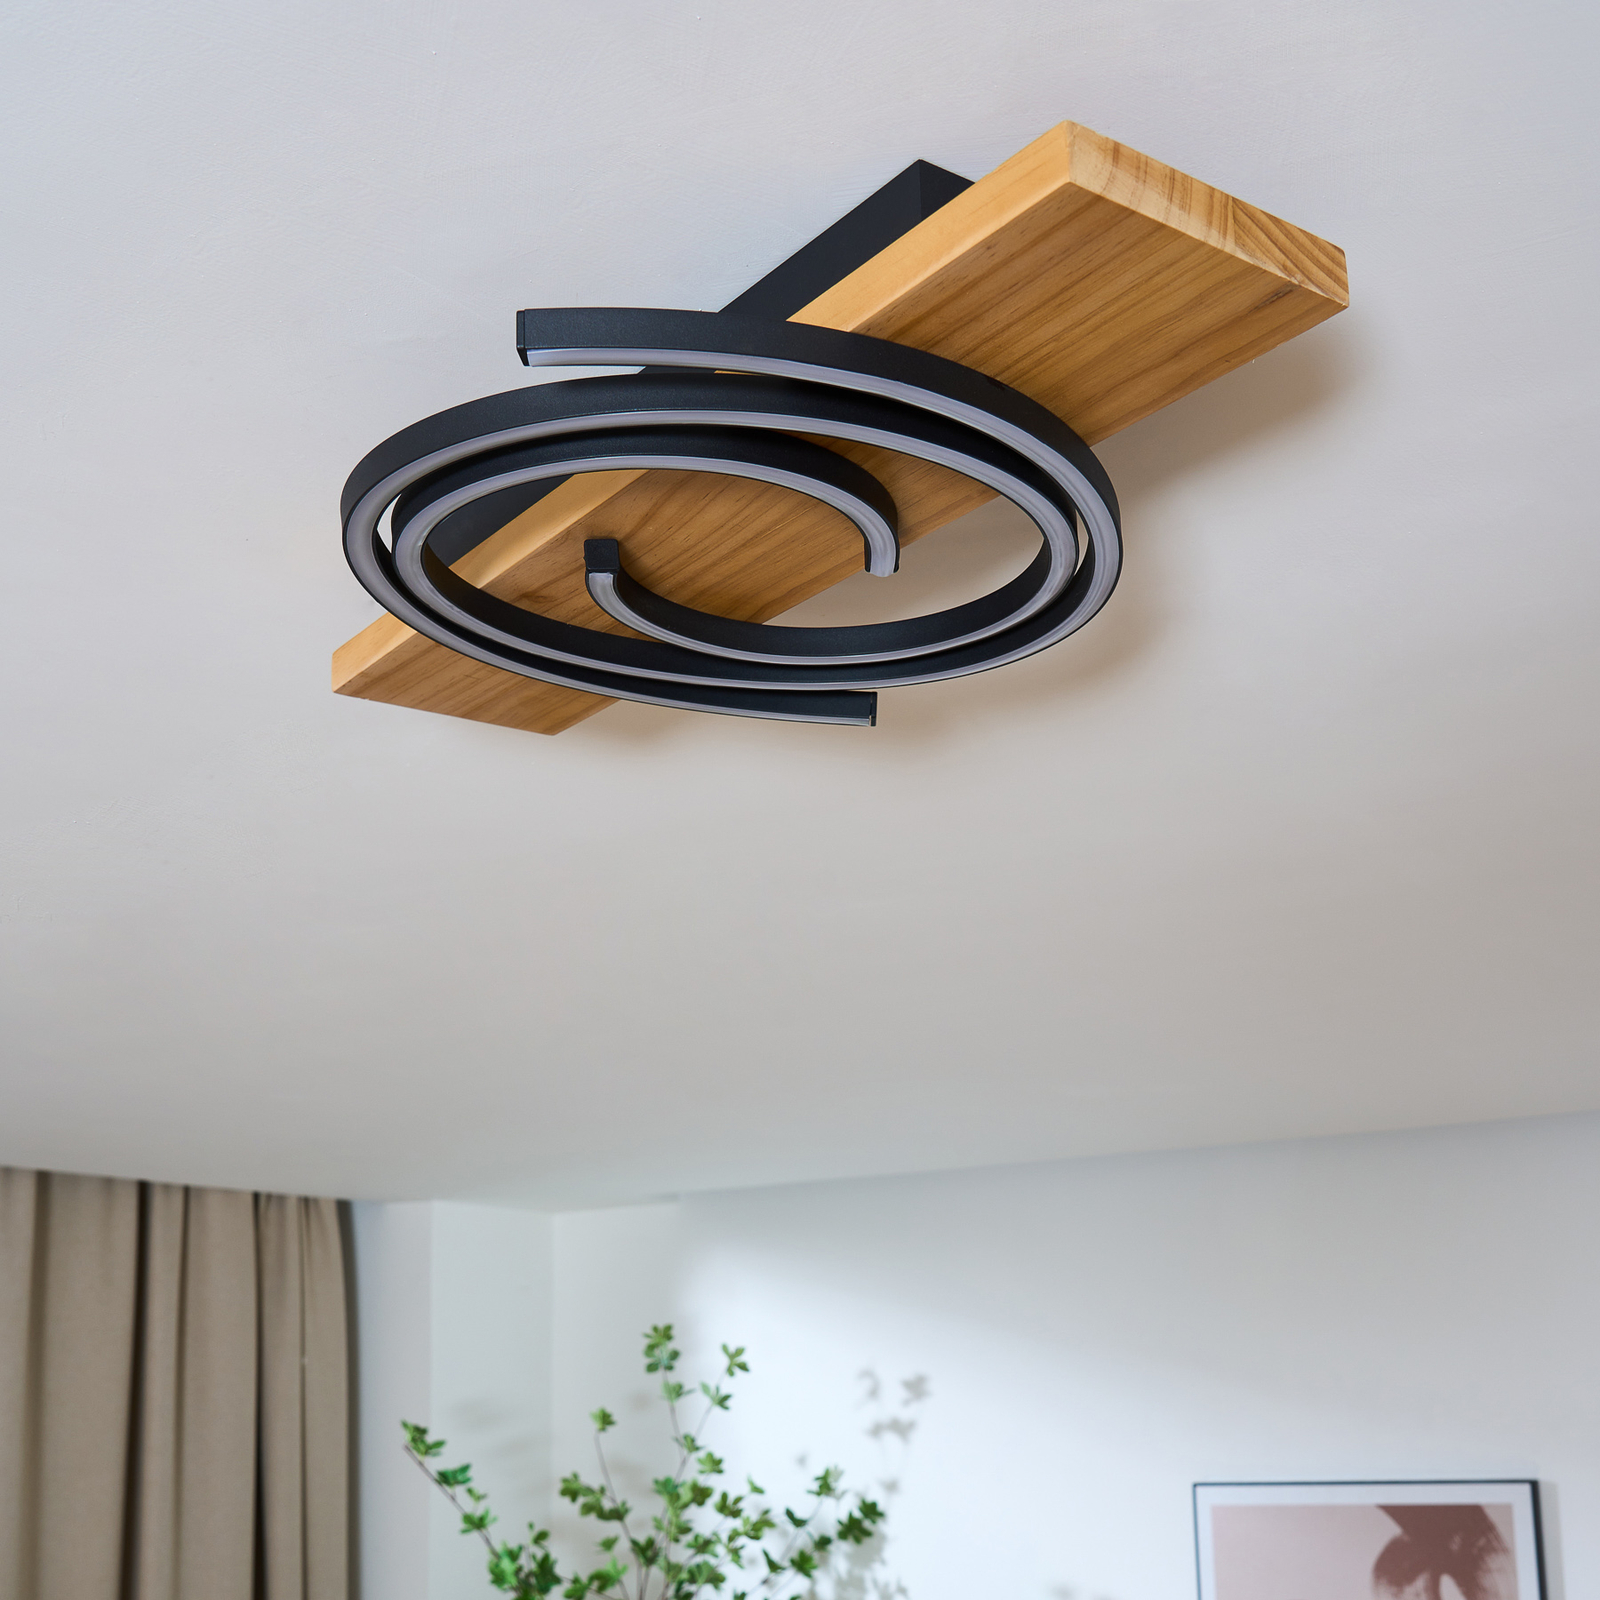 LED ceiling light Rifia, brown, length 50 cm, wood